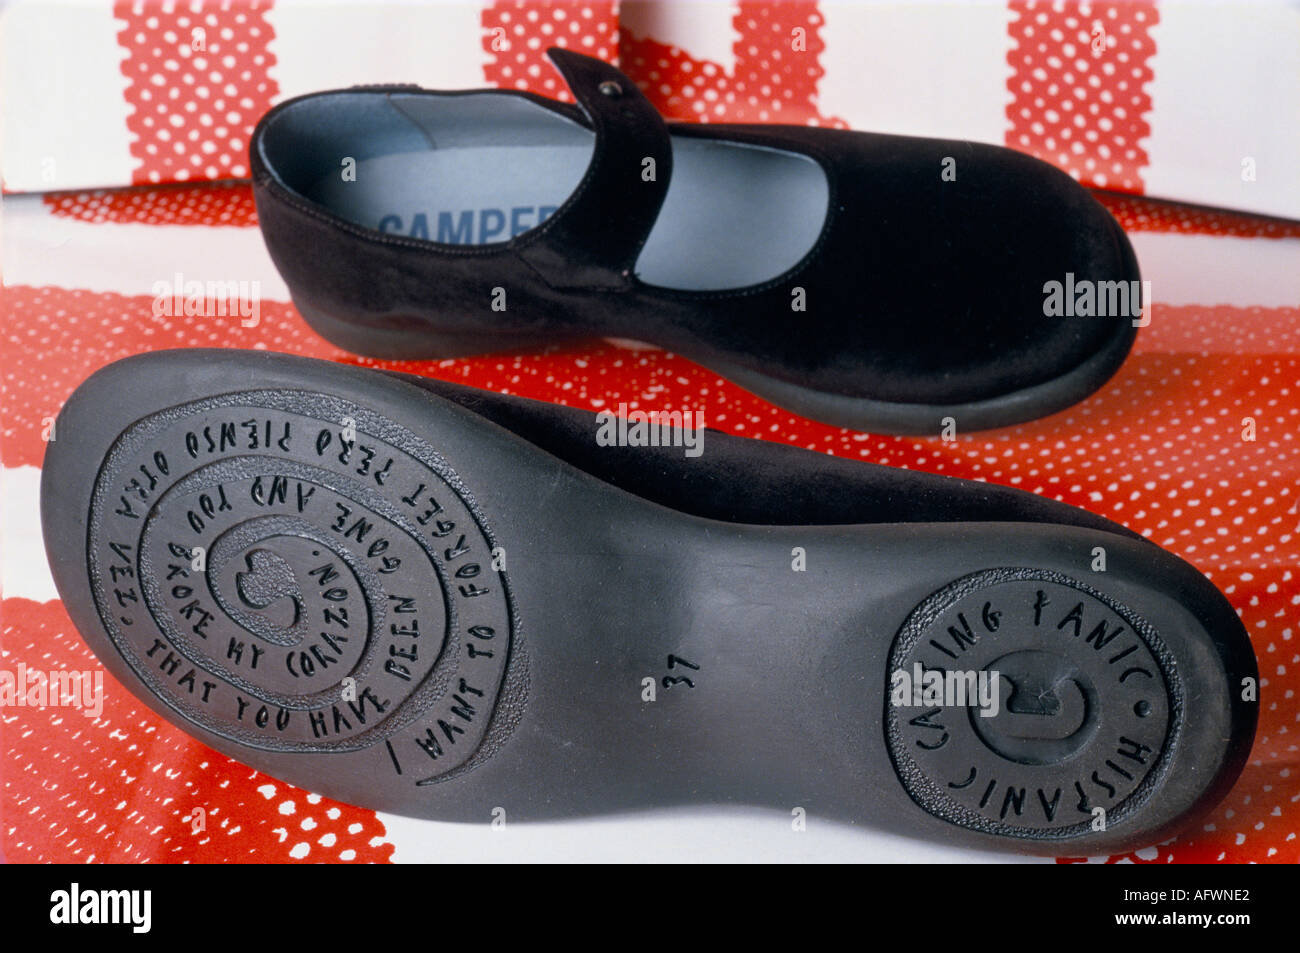 Eighties shoes -Fotos und -Bildmaterial in hoher Auflösung – Alamy